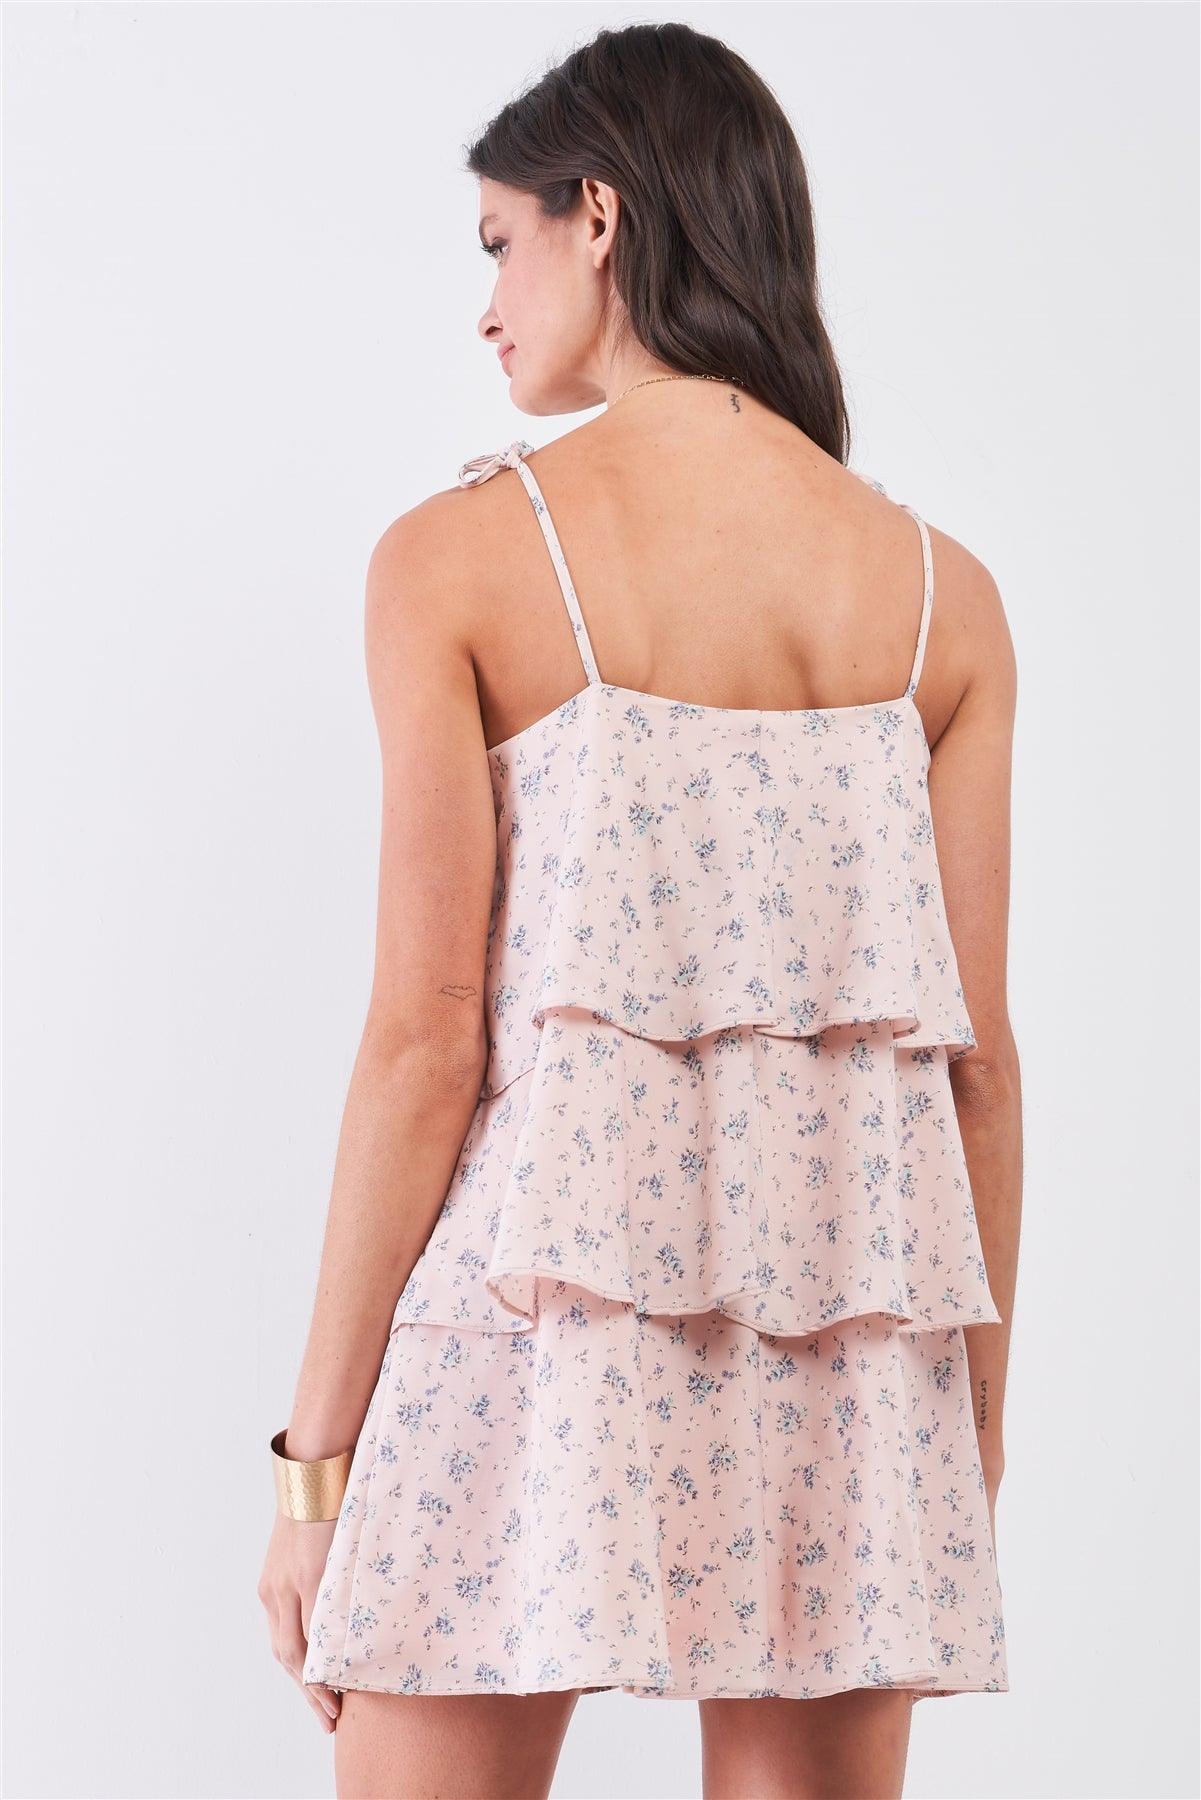 Blush Floral Print Sleeveless Self-Tie Shoulder Strap Detail Layered Flounce Mini Dress /1-2-2-1